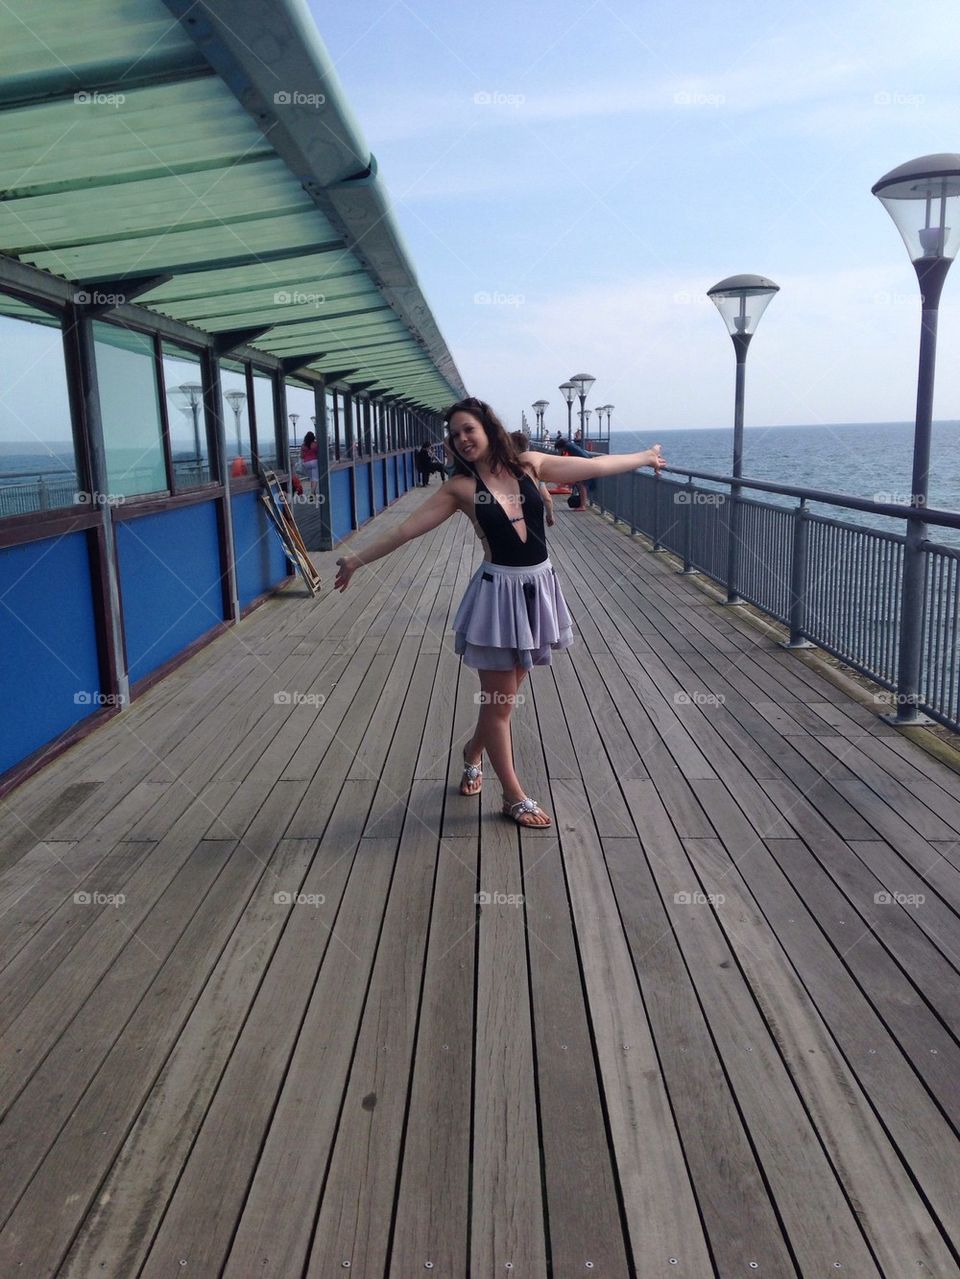 Happy pier times